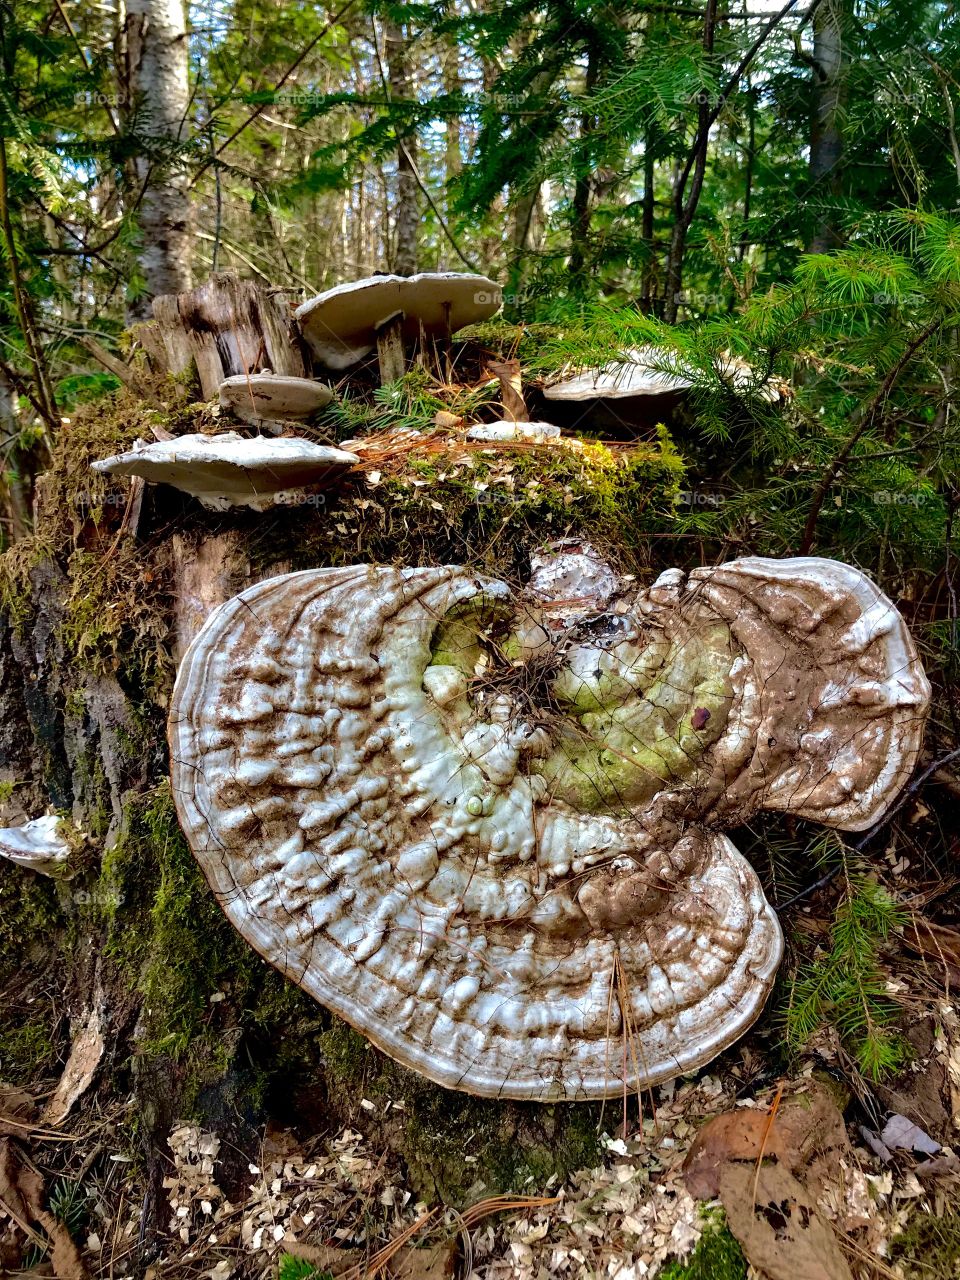 Wild mushrooms 🍄